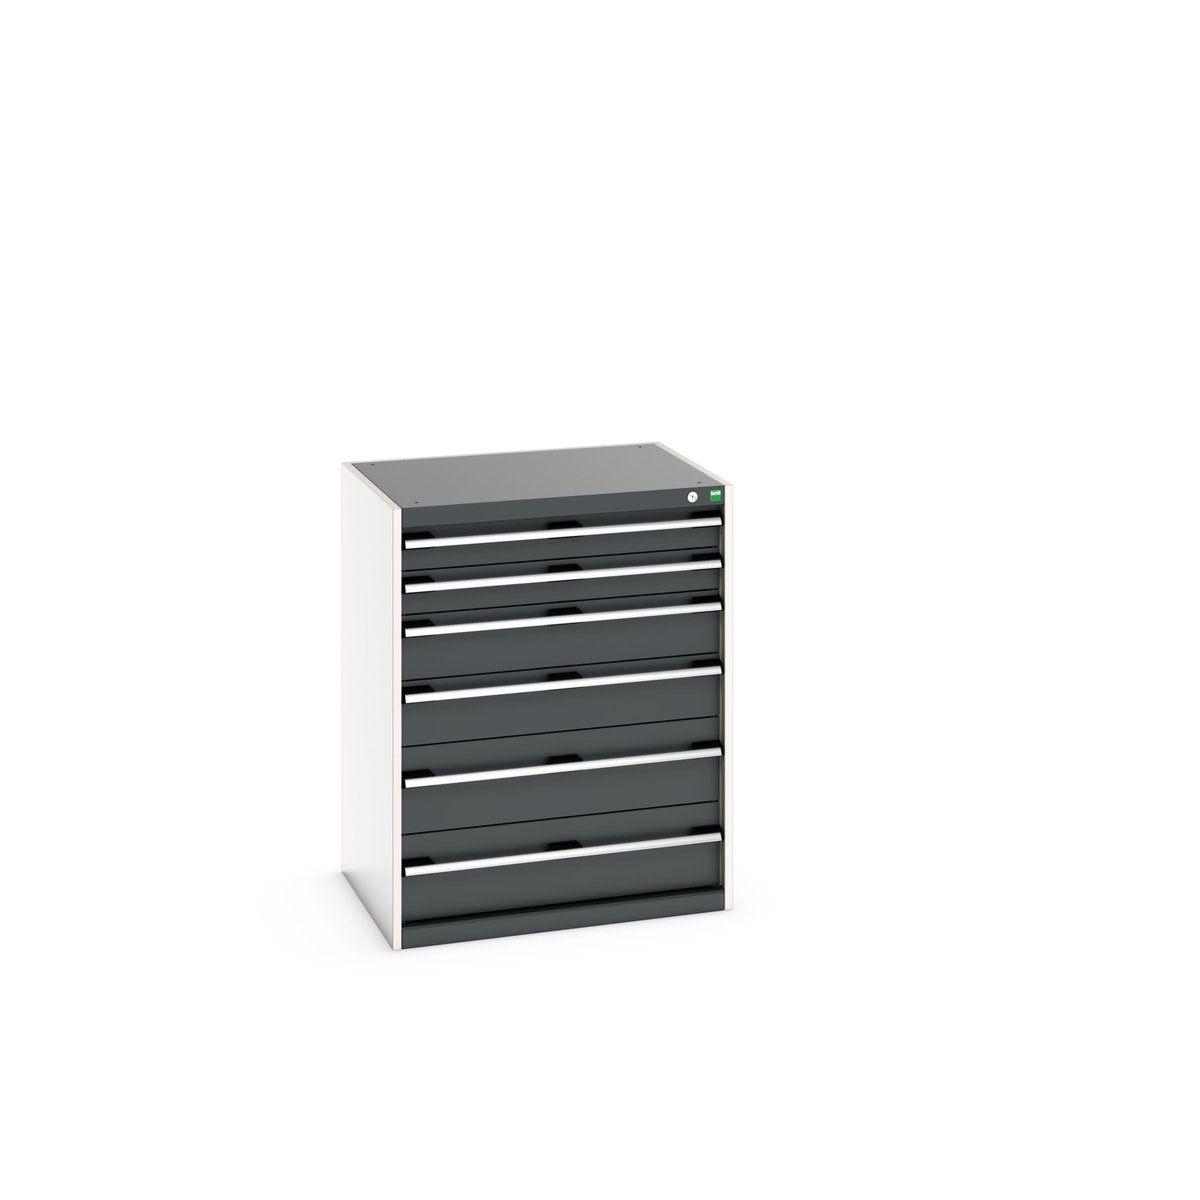 40020049. - cubio drawer cabinet